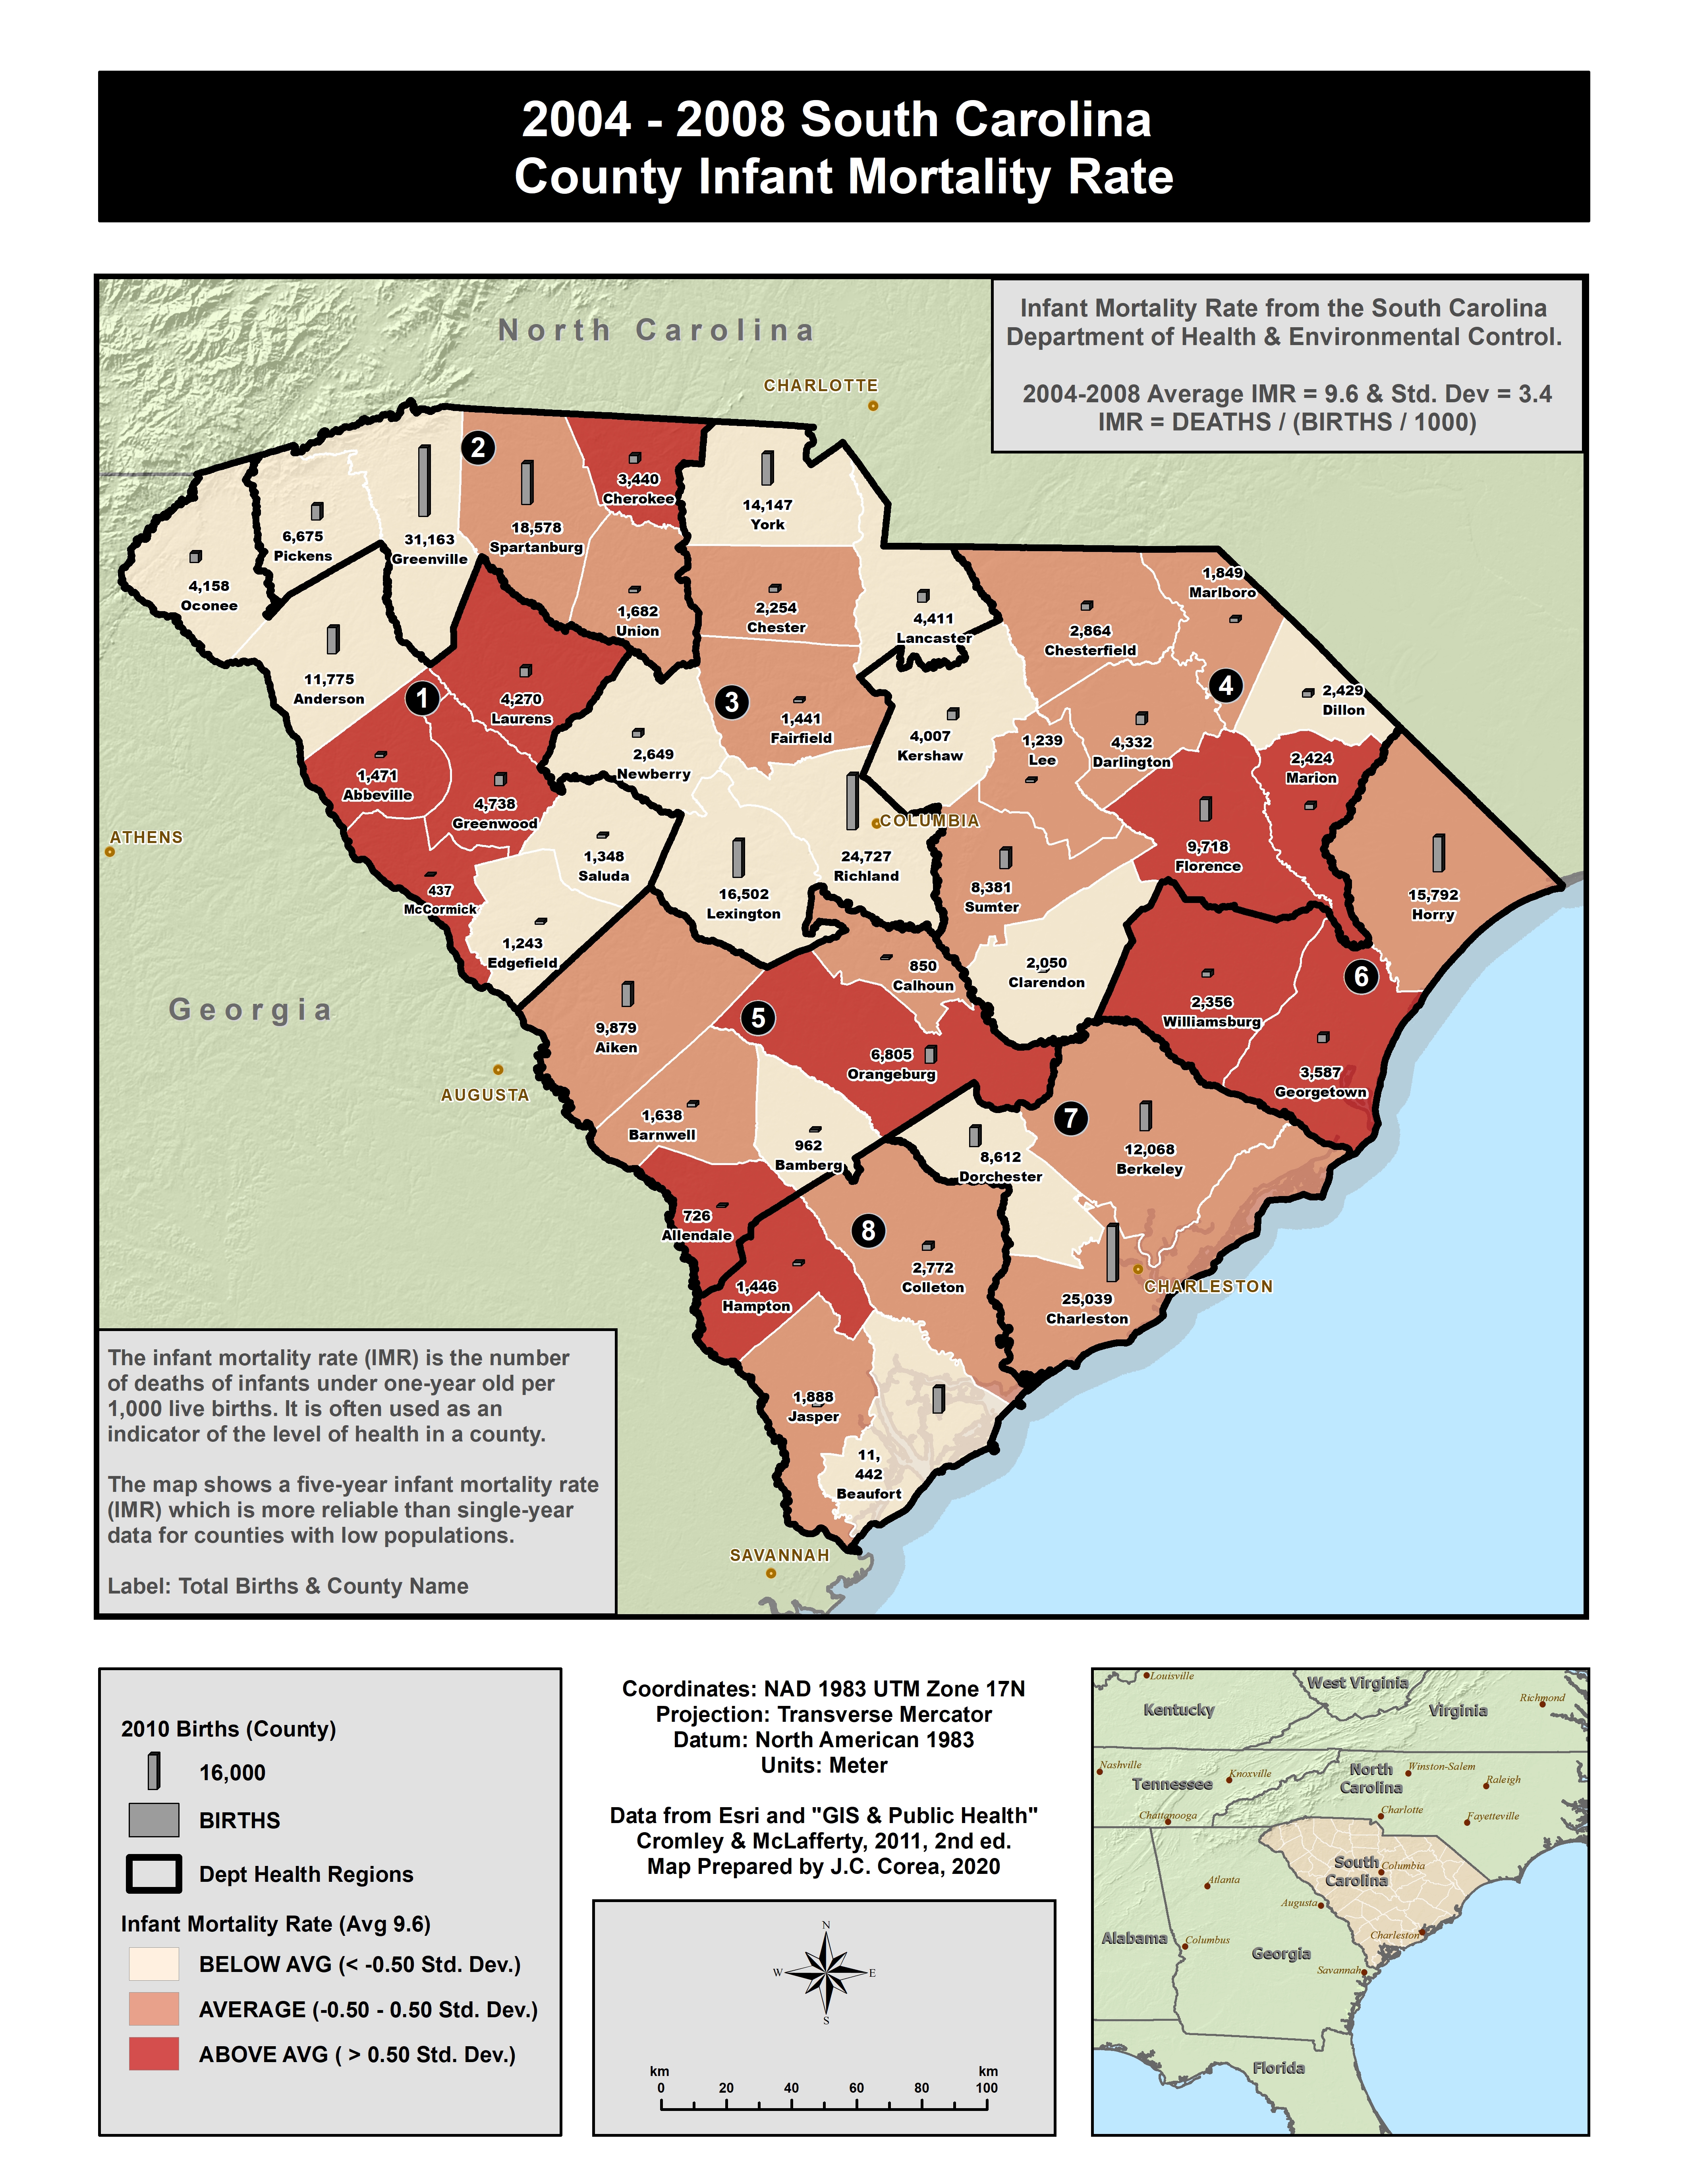 South Carolina County Infant Mortality Rate 2004 - 2008